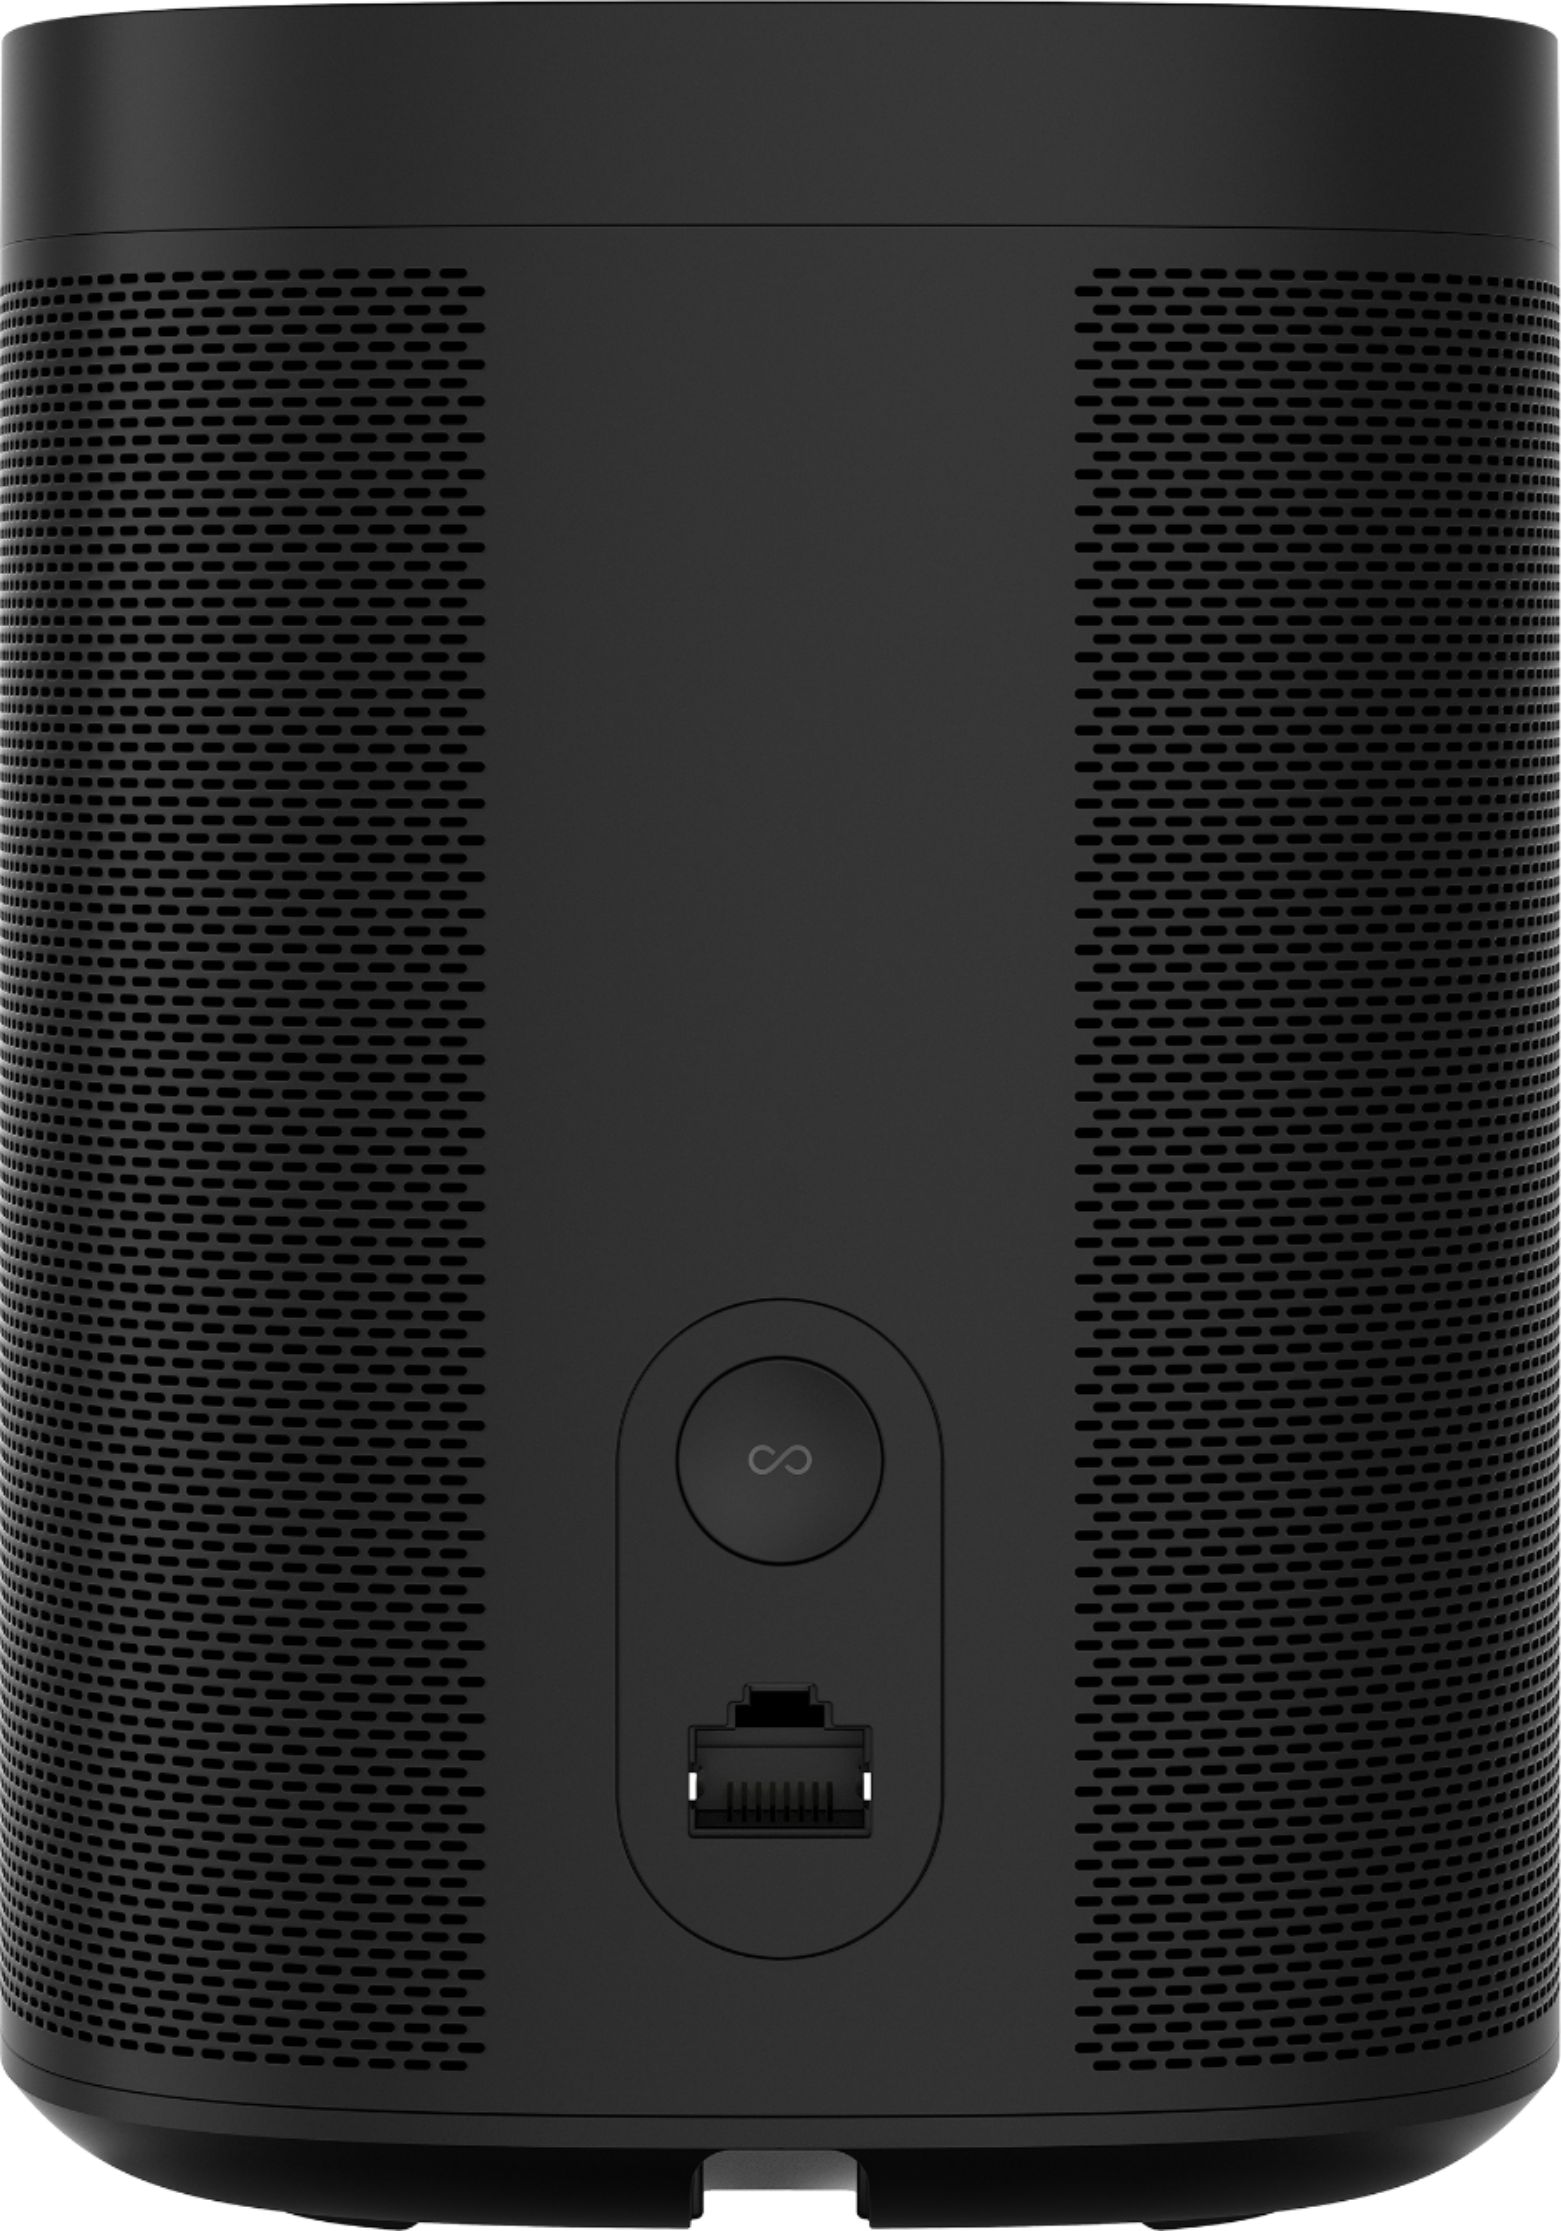 Sonos One (Gen 2) Smart Speaker with Voice Control built-in Black